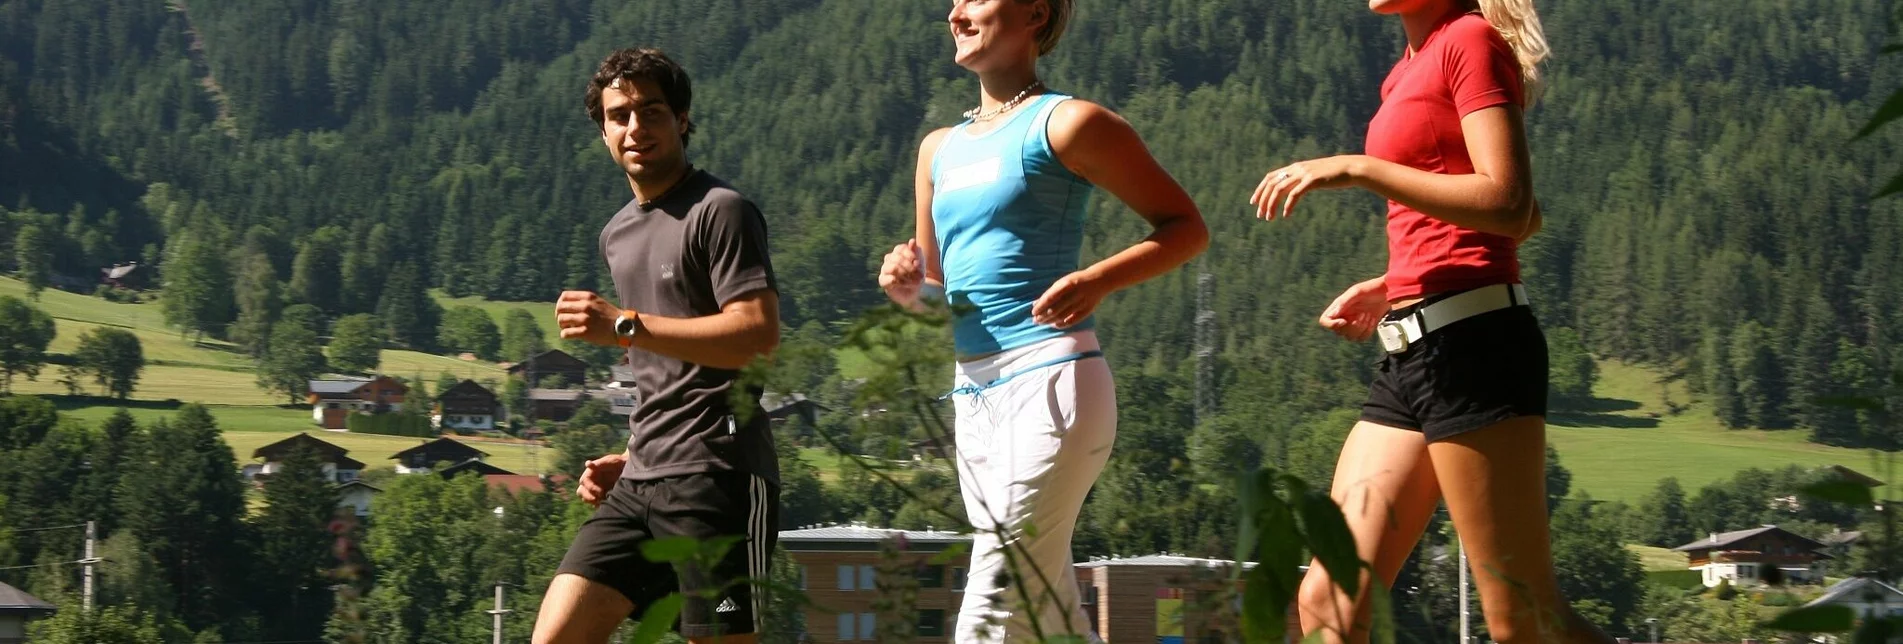 Jogging The Classic Run - Touren-Impression #1 | © Tourismusverband Schladming - Herbert Raffalt